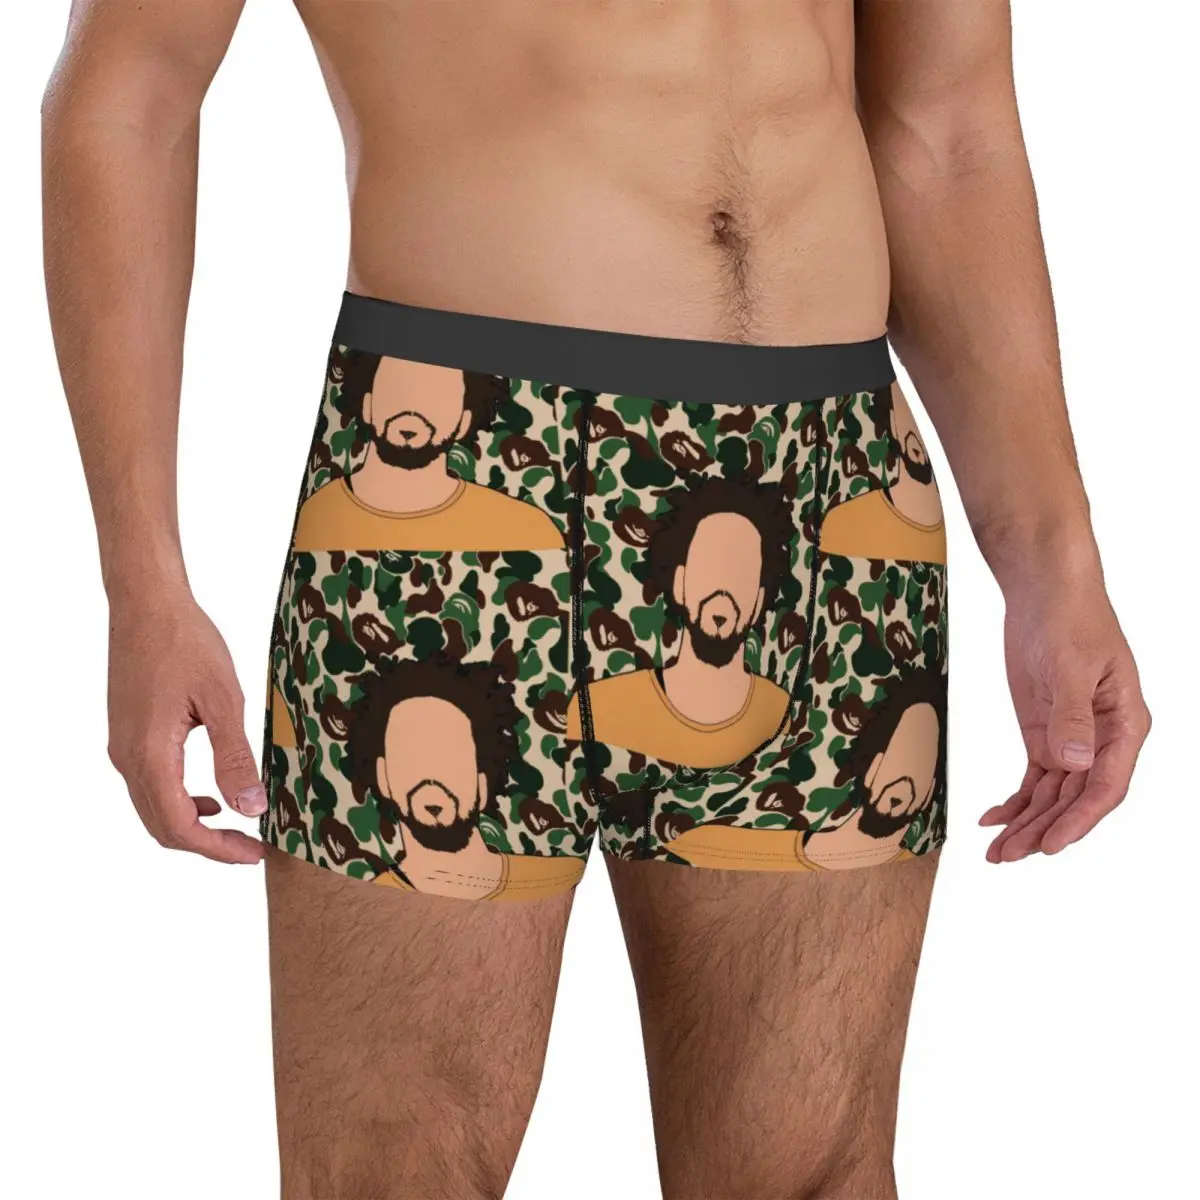 

Abstract Rap Cole Underwear J Cole Music platinum record Pouch Boxer Shorts Print Shorts Briefs Elastic Males Panties Big Size